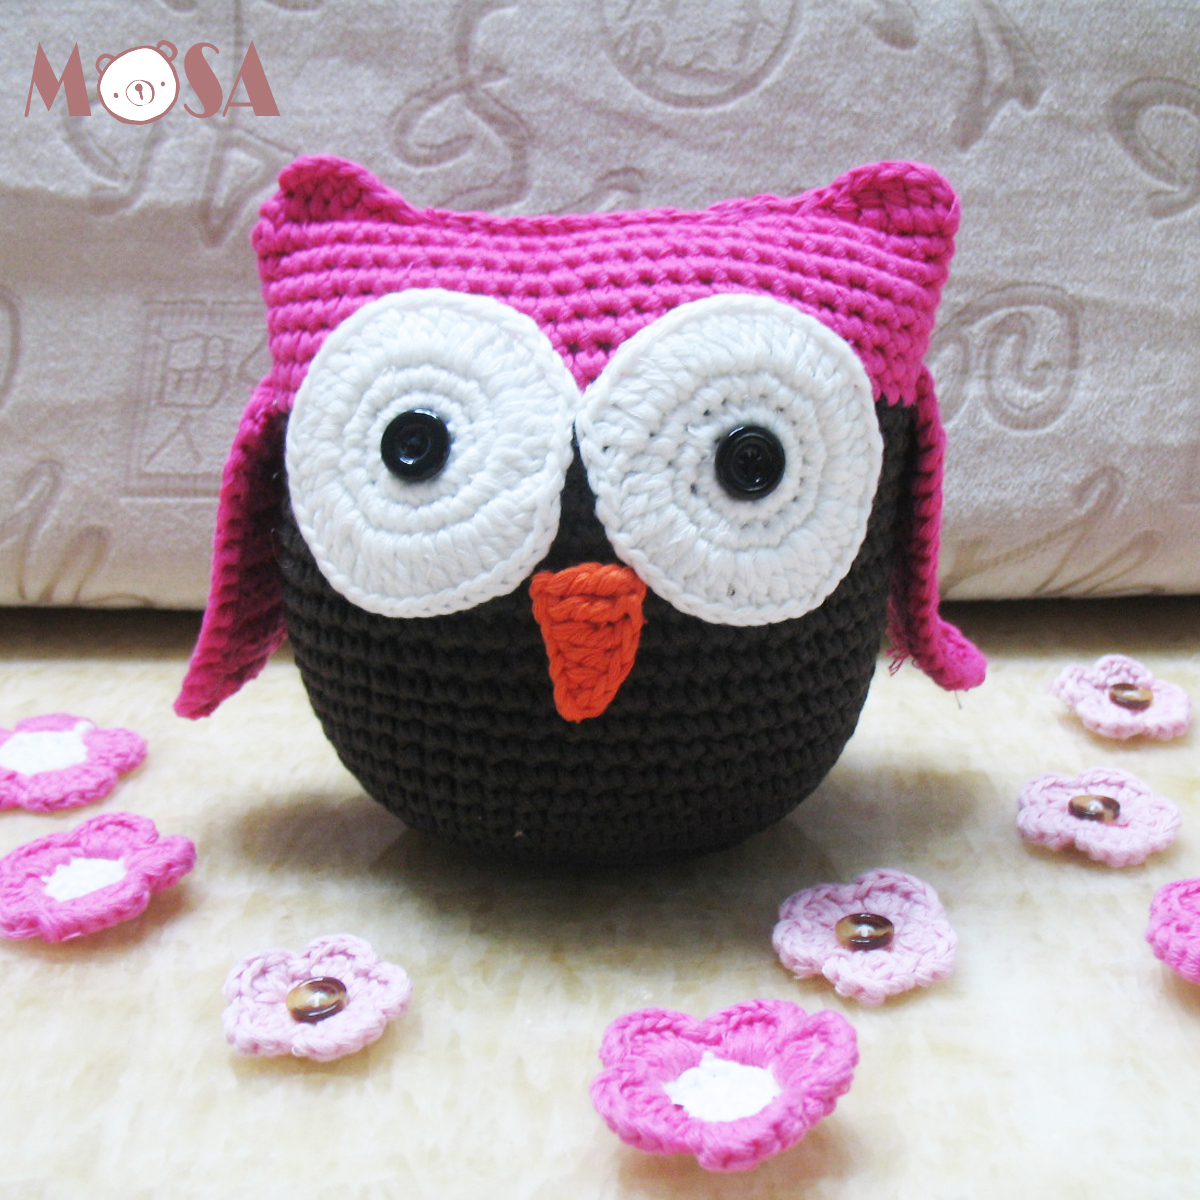 Crochet Owl Pattern Crochet Easter Decorations Hot Pinkbrown Owl Pattern Amigurumi